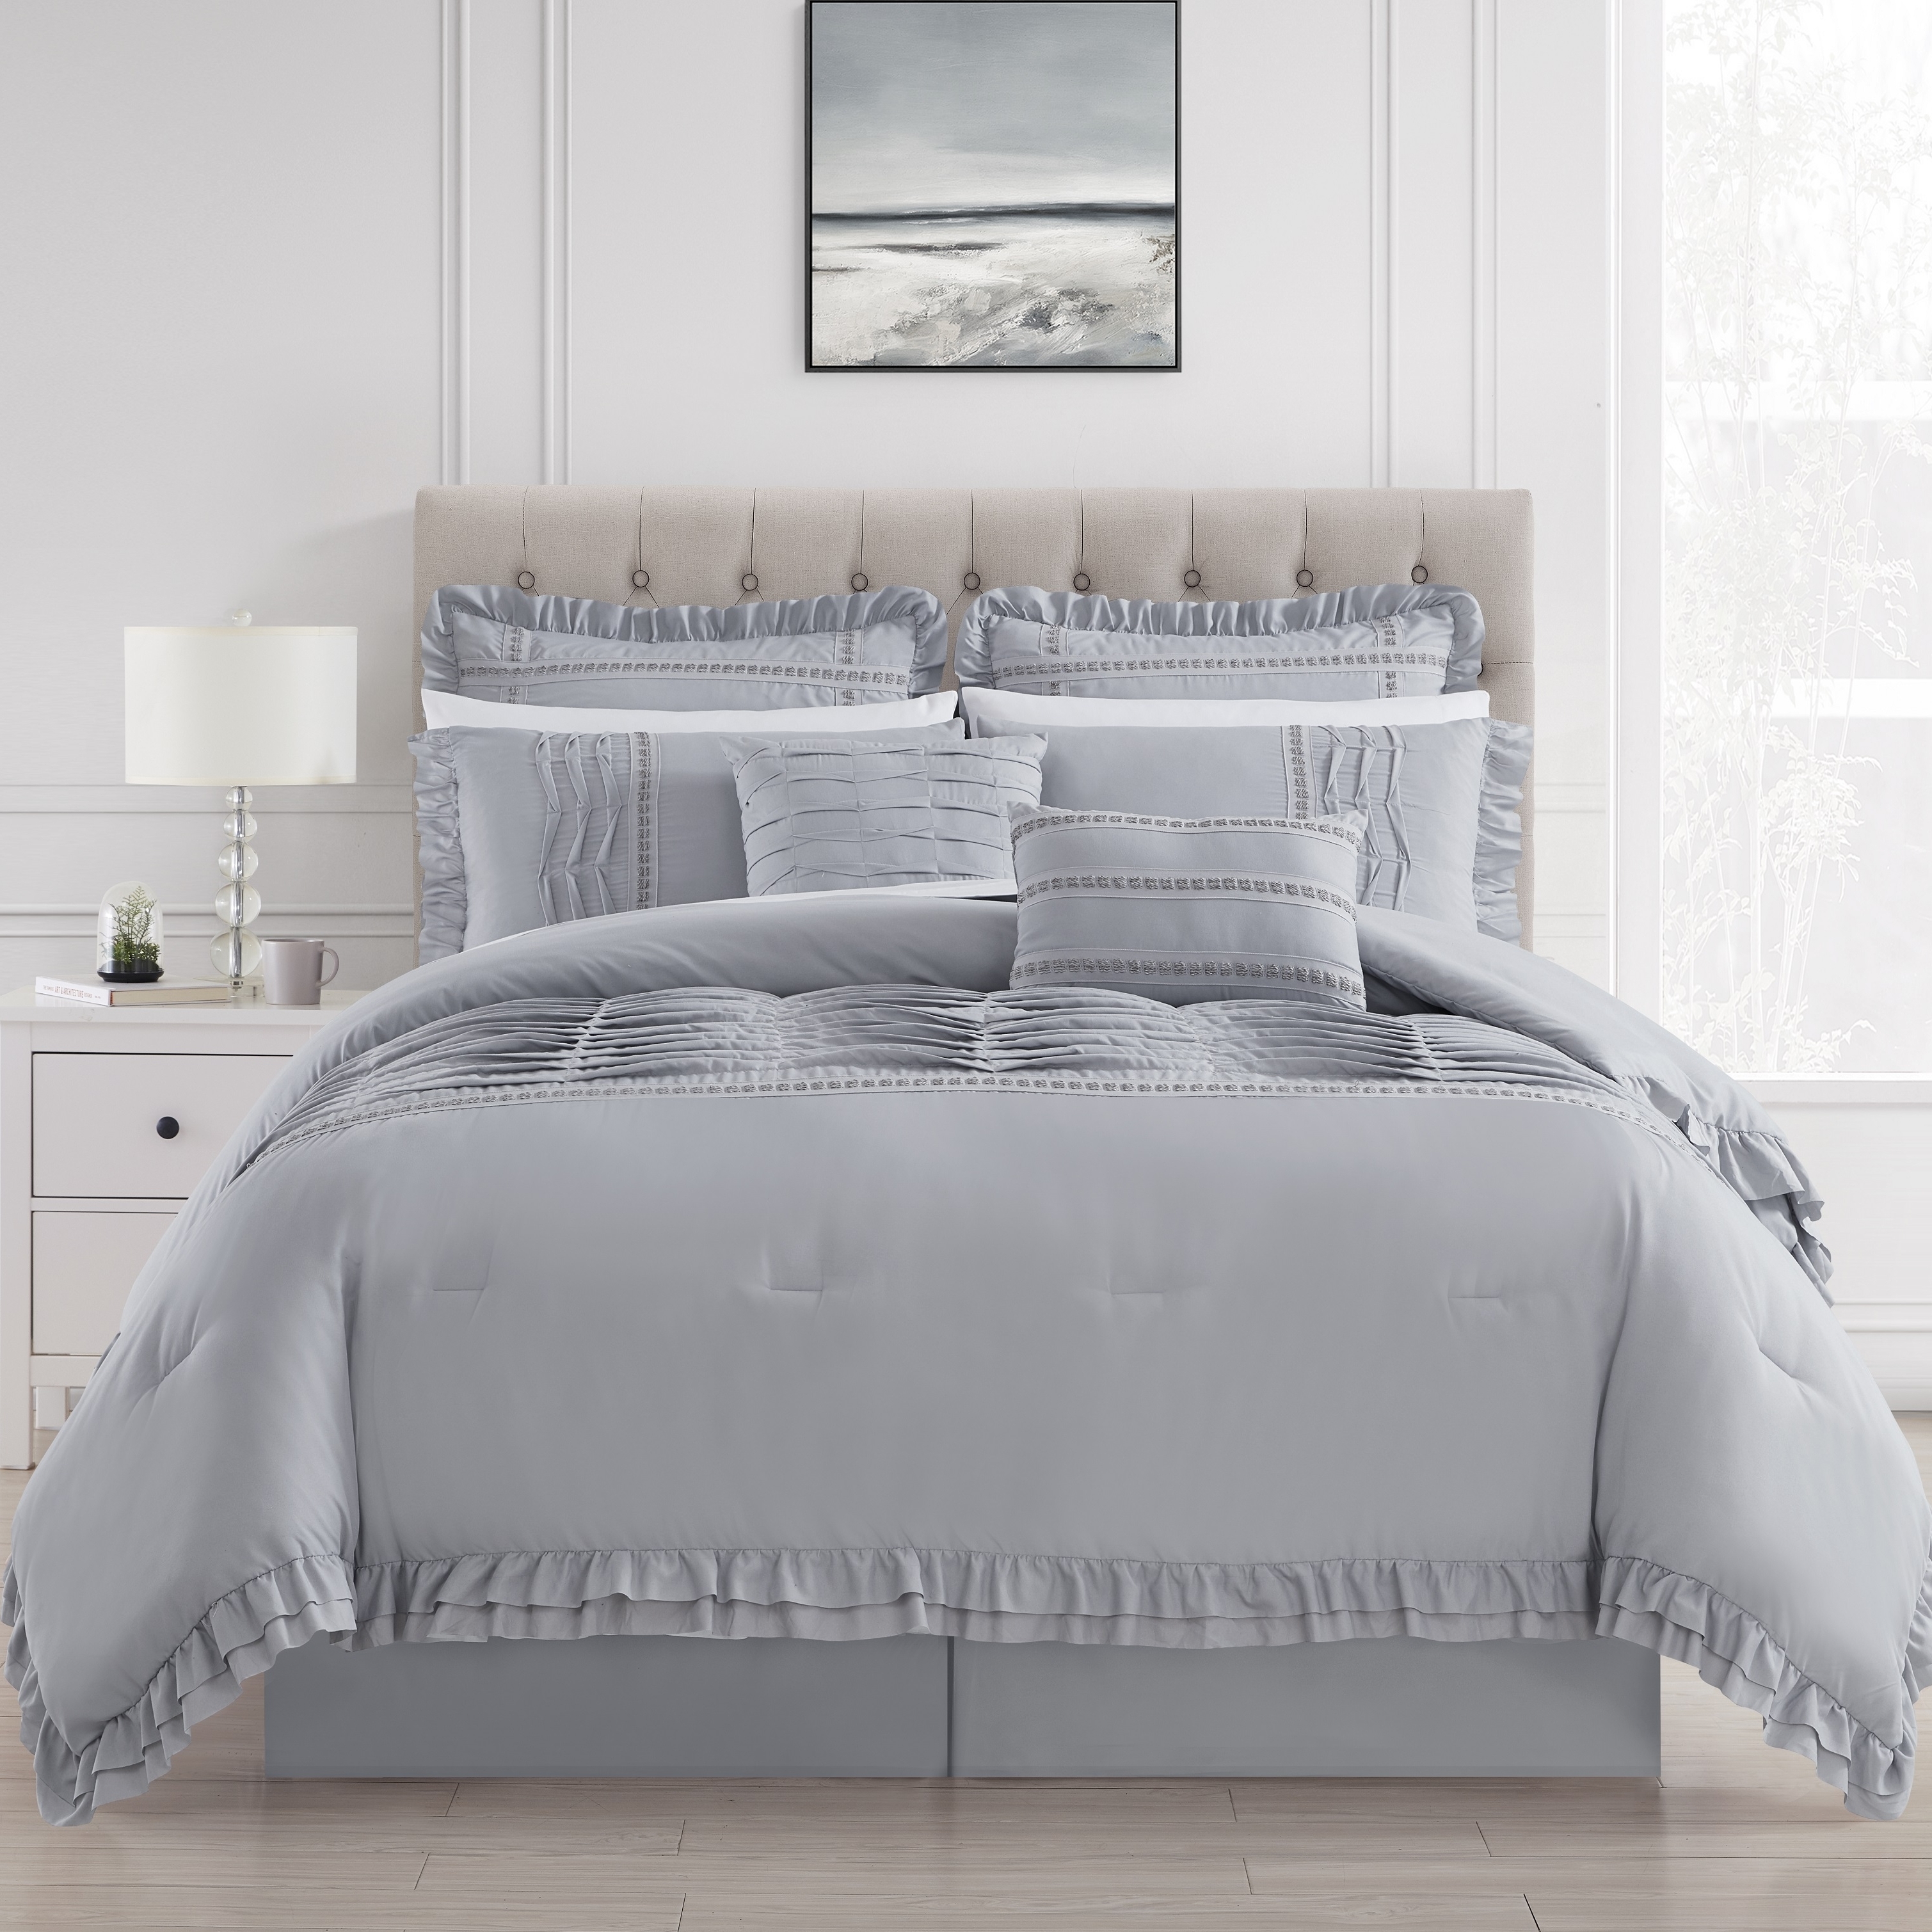 Yvonna 8 Piece Comforter Set Ruffled Pleated Flange Border Design Bedding - Blue, Queen